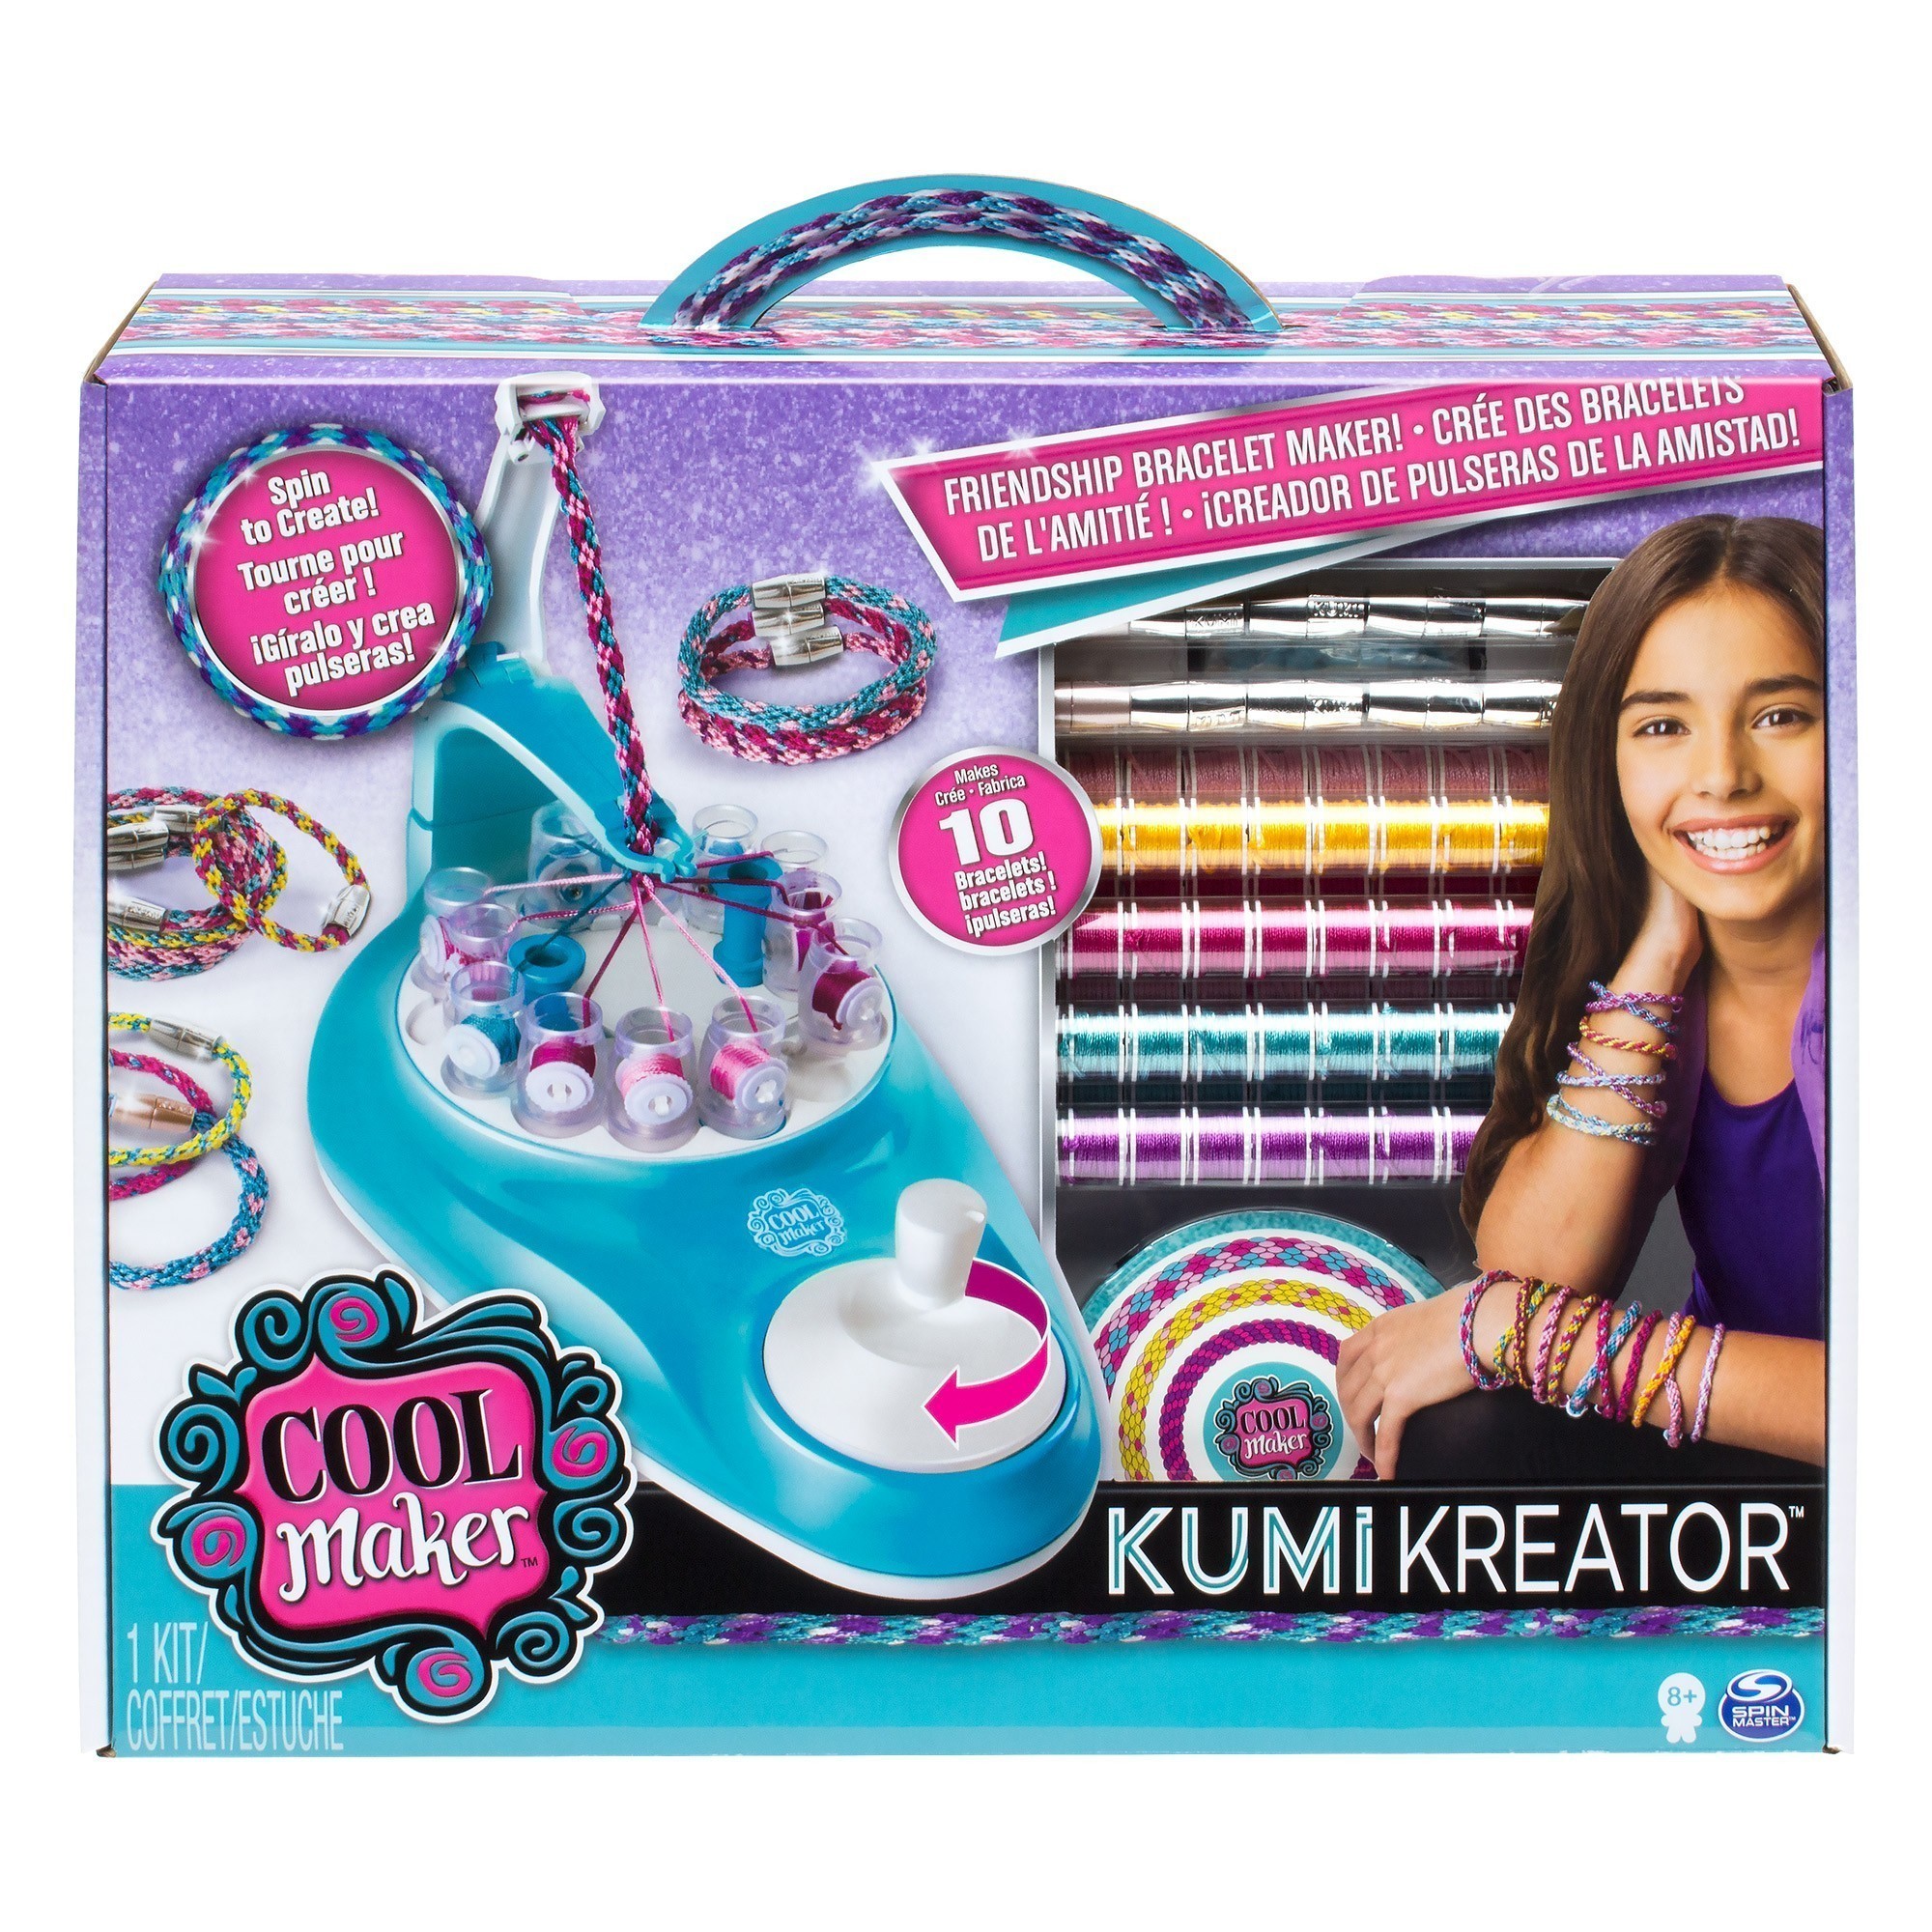 Cool Maker - Kumi Kreator